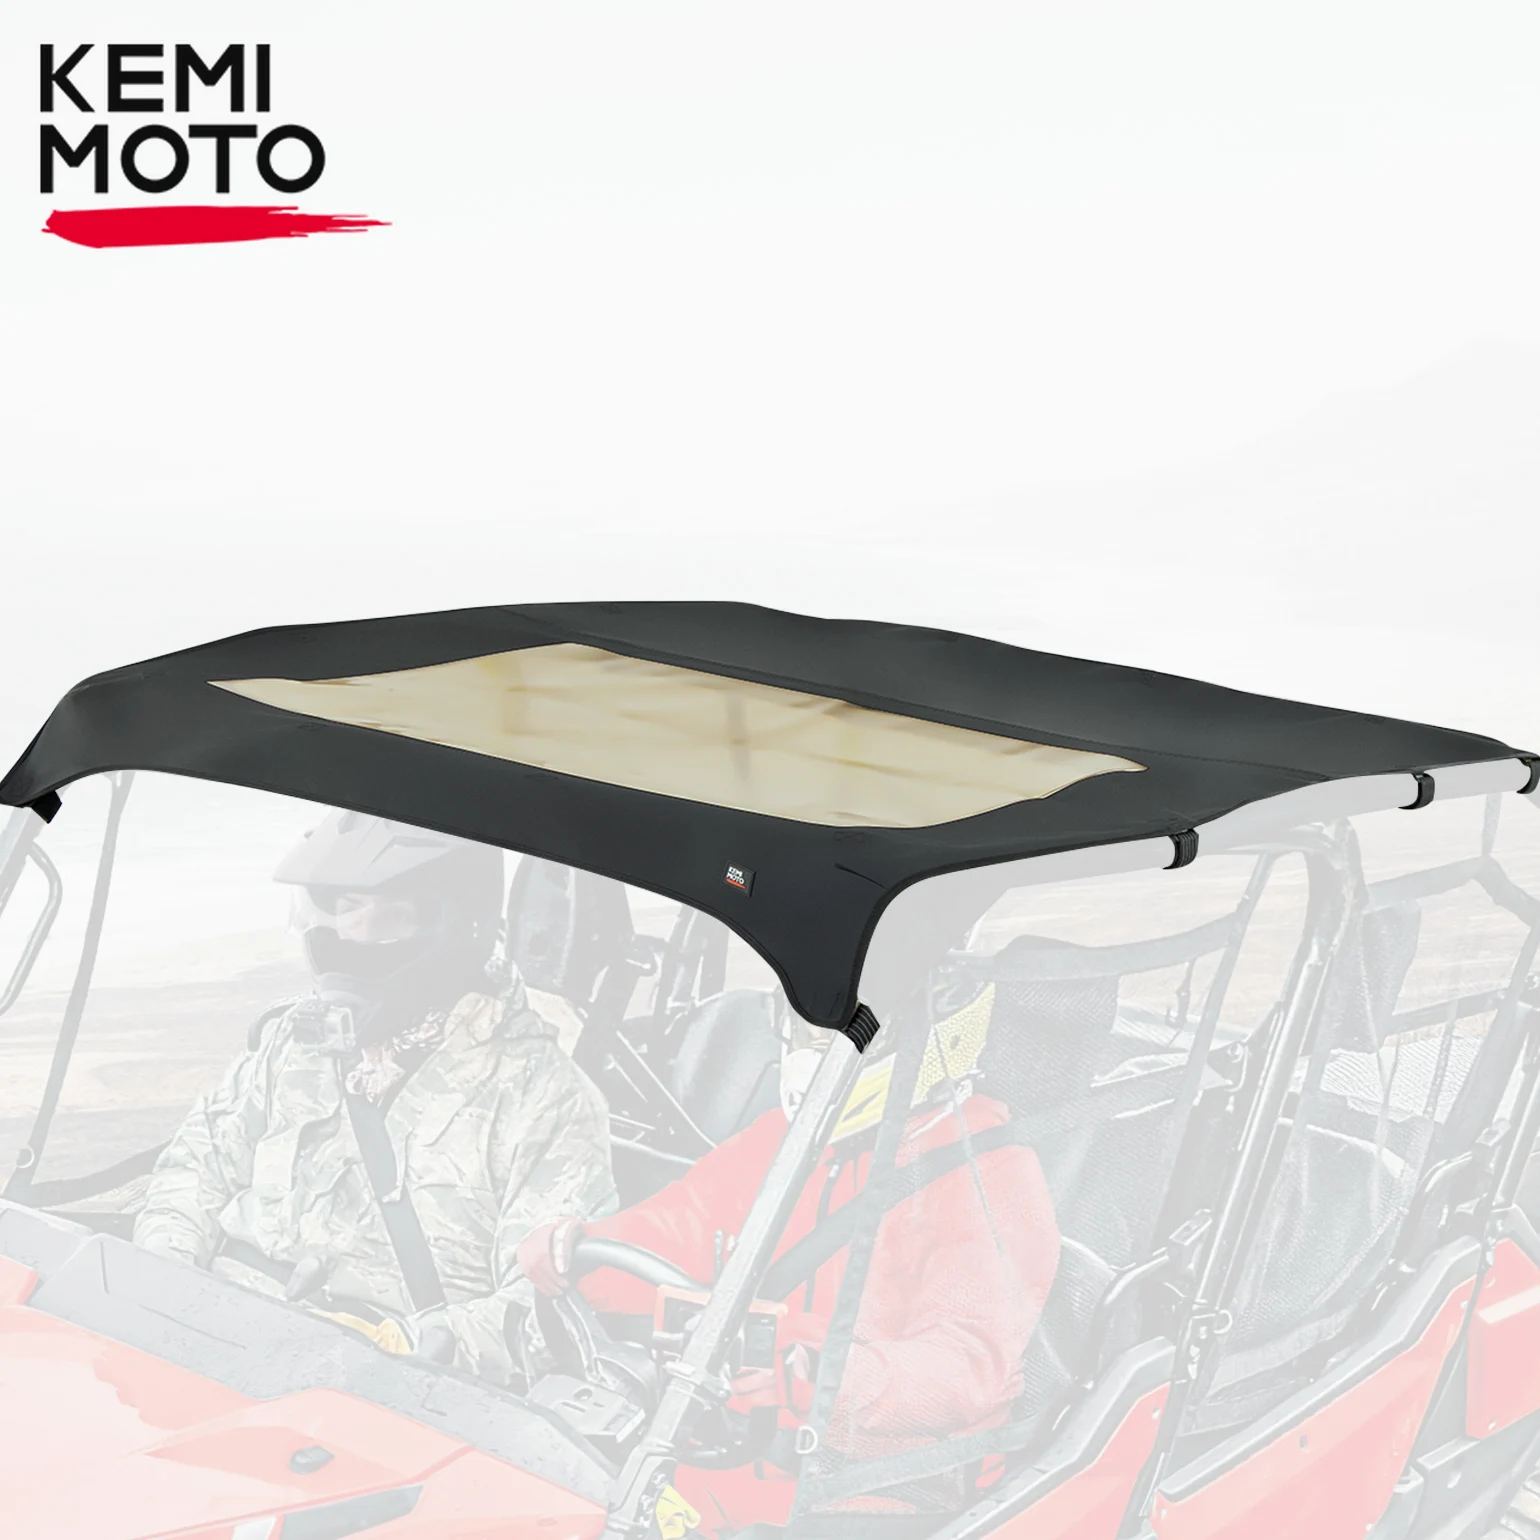 KEMIMOTO UTV Sunshade Soft Top Water-Resistant Black Fabric PVC Roof Top Compatible with Honda Pioneer 1000-6 2023 sunshade sail oxford fabric triangular 3 6x3 6x3 6 m taupe